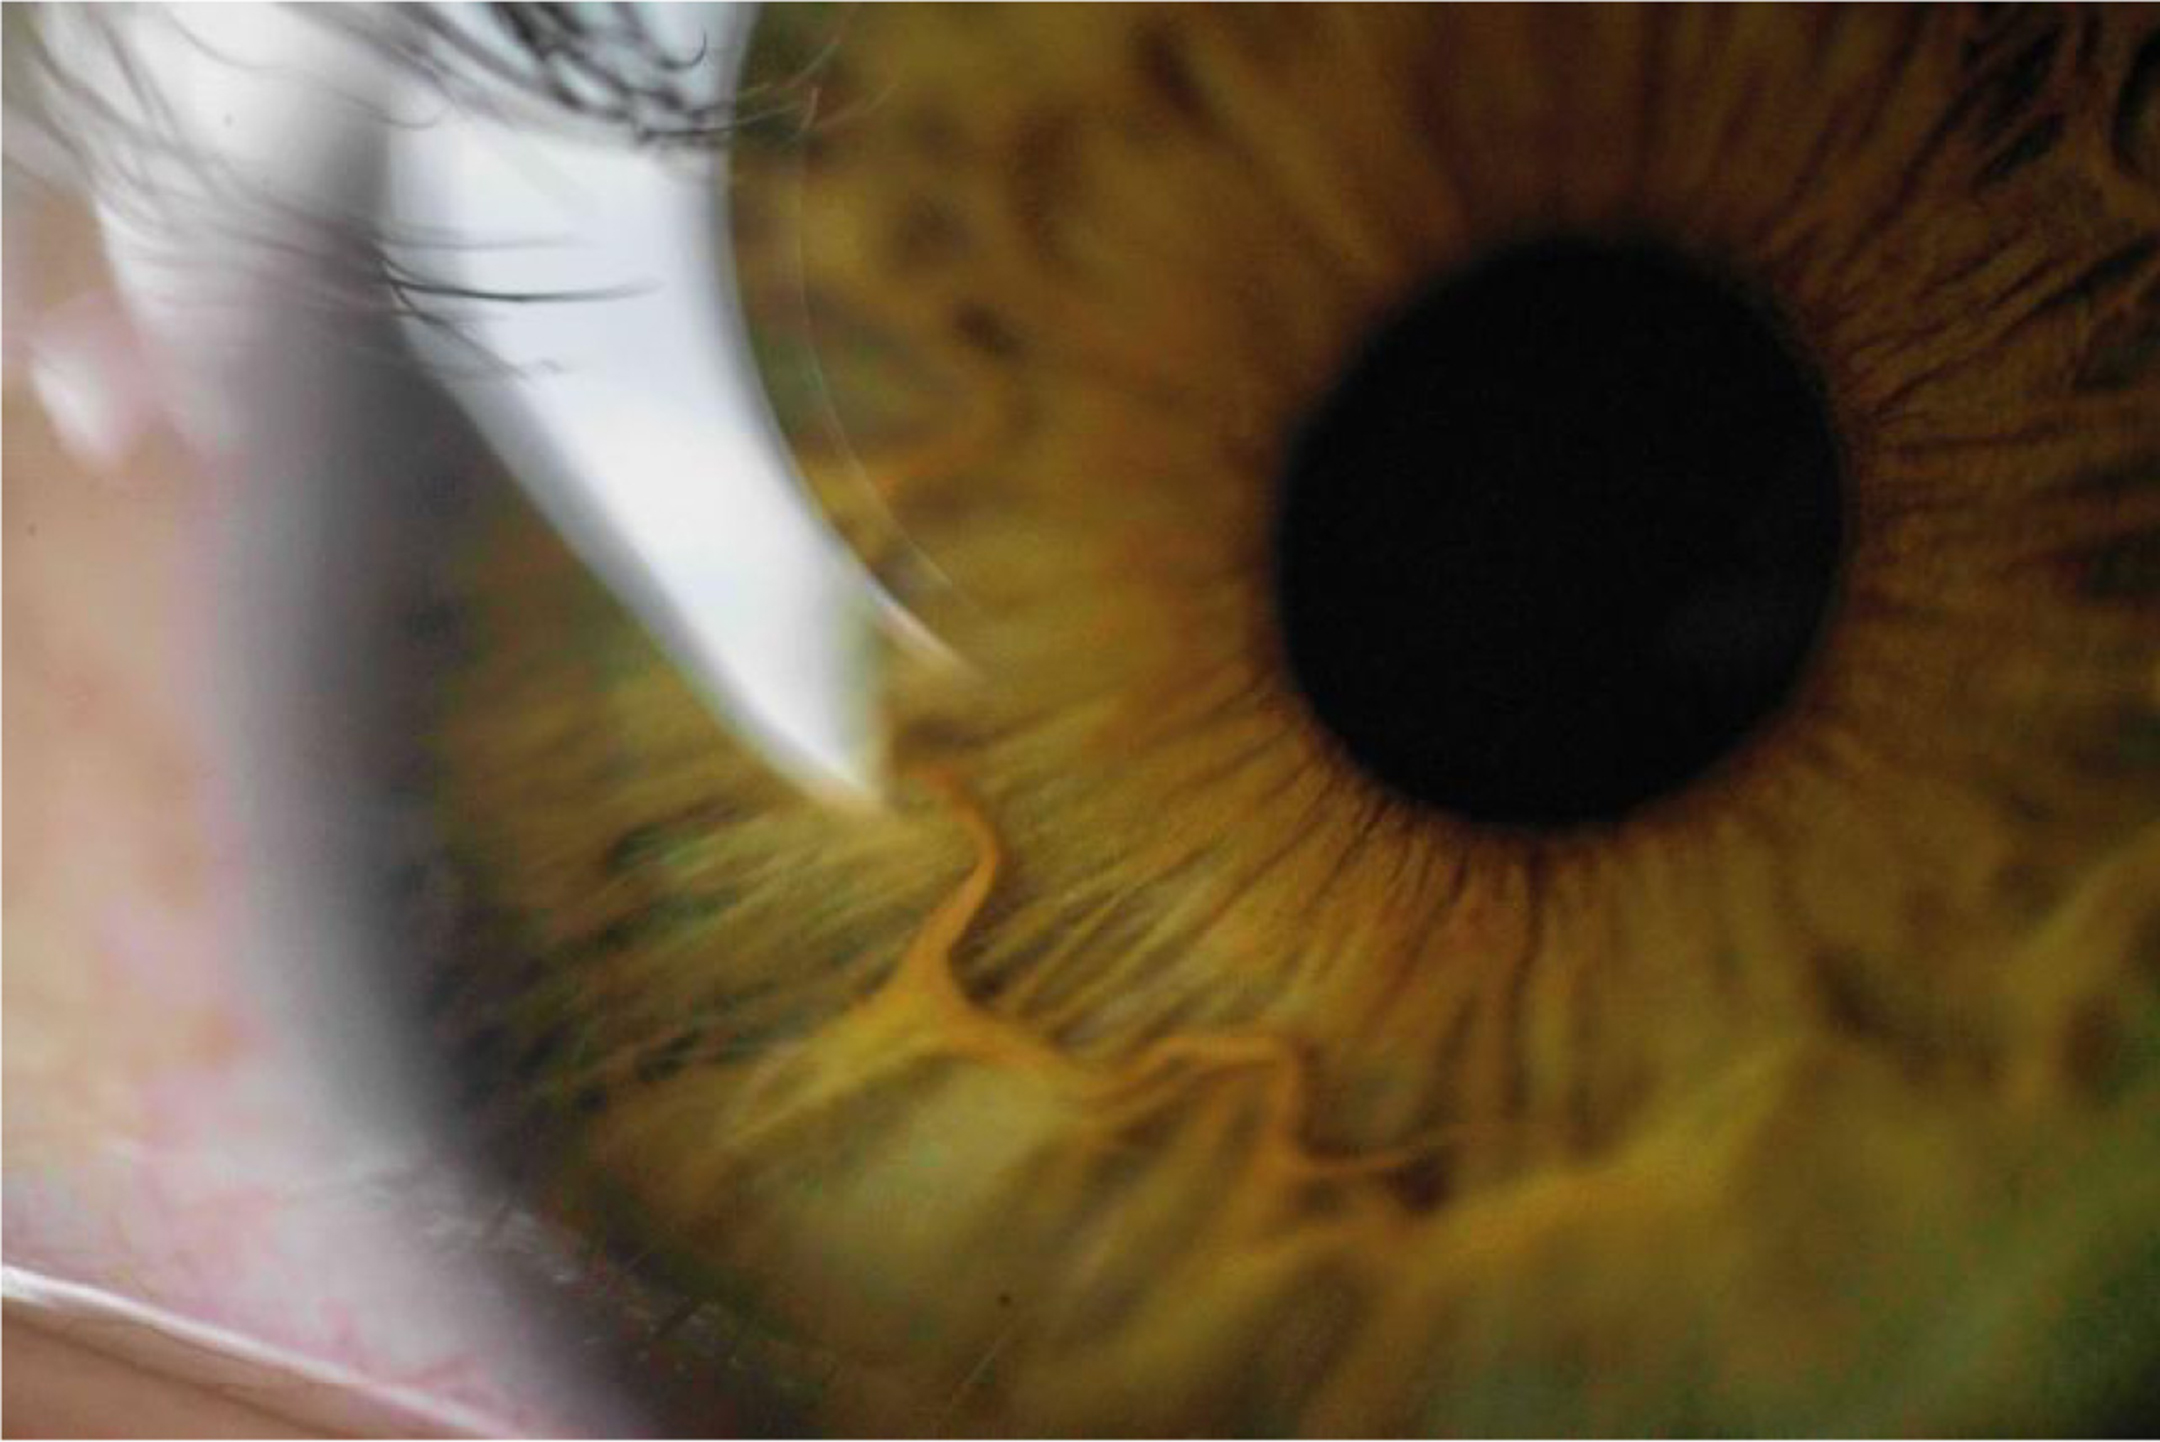 Close-up photograph of an eye